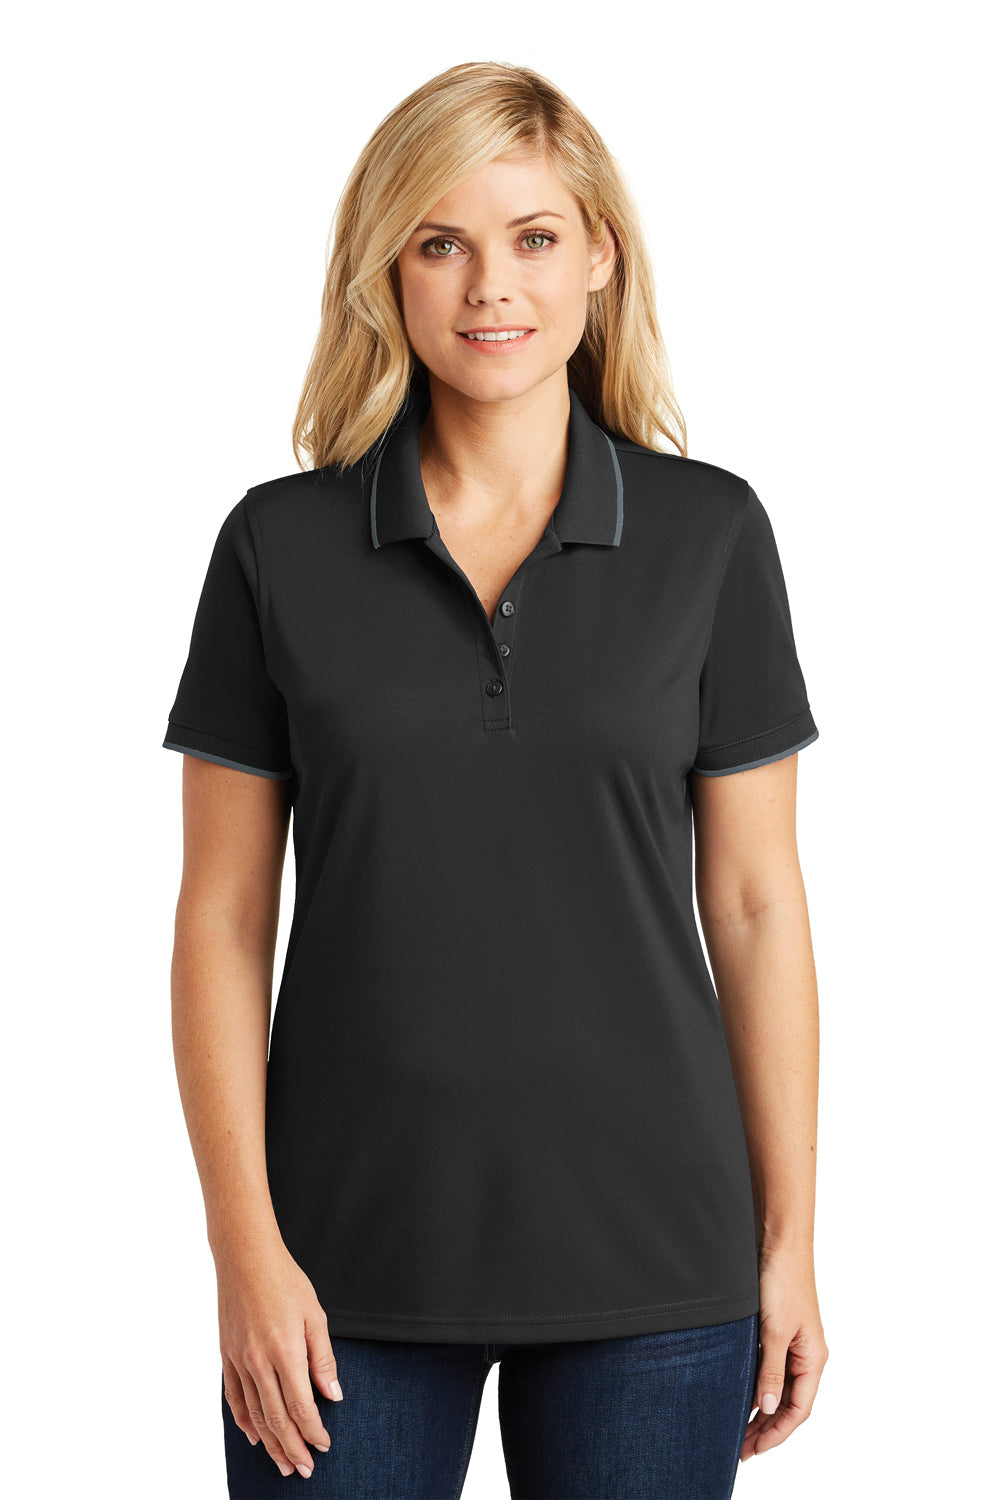 Port Authority LK111 Womens Dry Zone Moisture Wicking Short Sleeve Polo Shirt Black/Graphite Grey Front